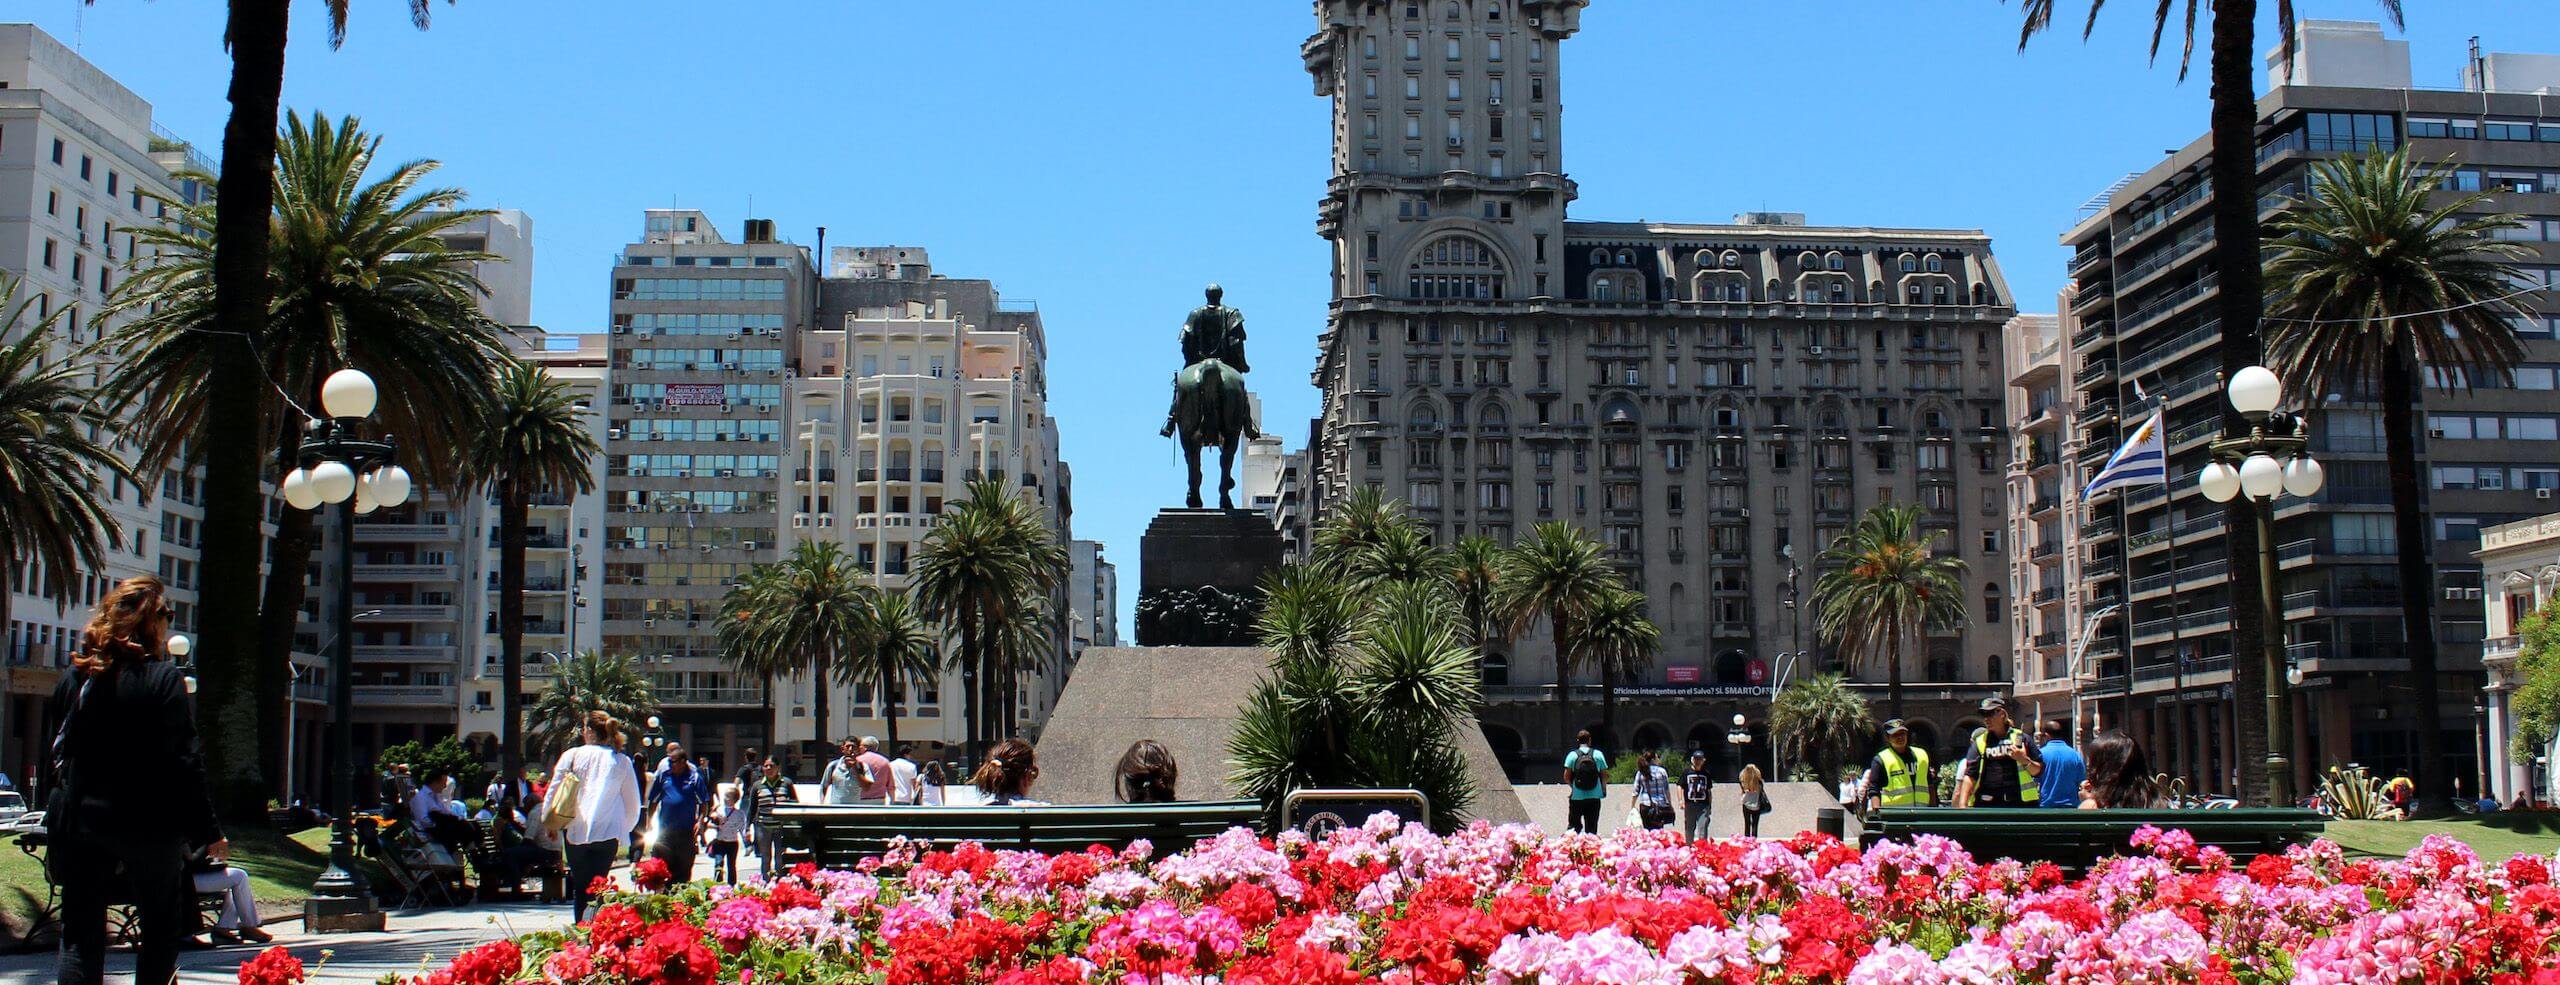 Plaza Independencia, Montevideo Uruguay